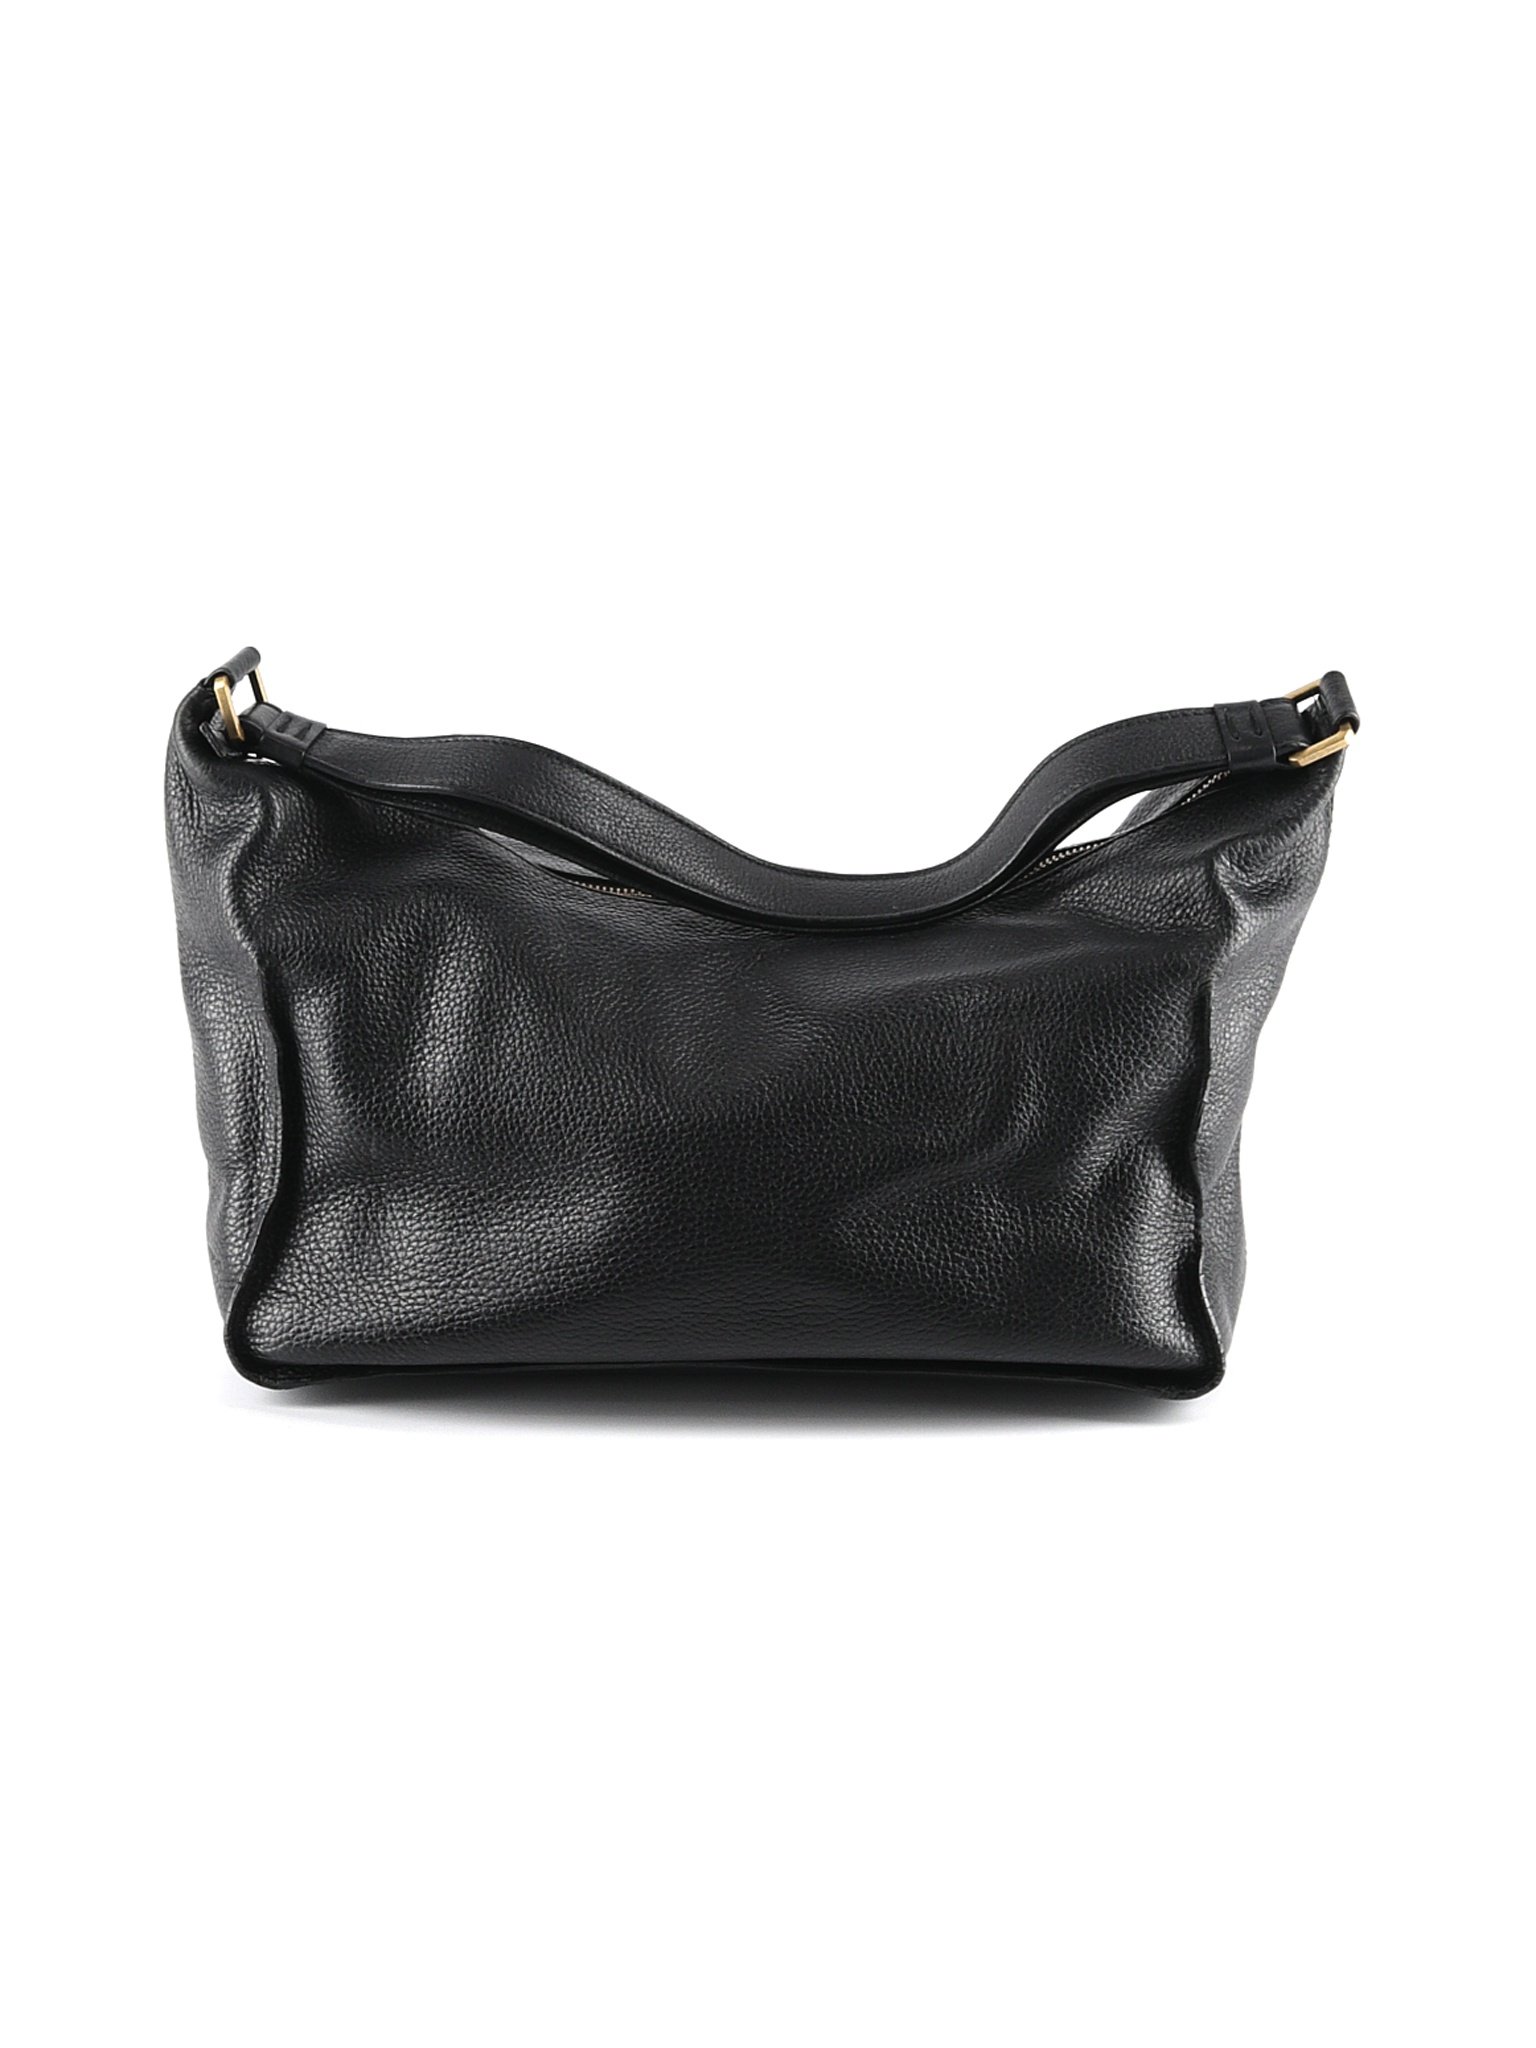 Adrienne Vittadini Women Black Leather Shoulder Bag One Size | eBay